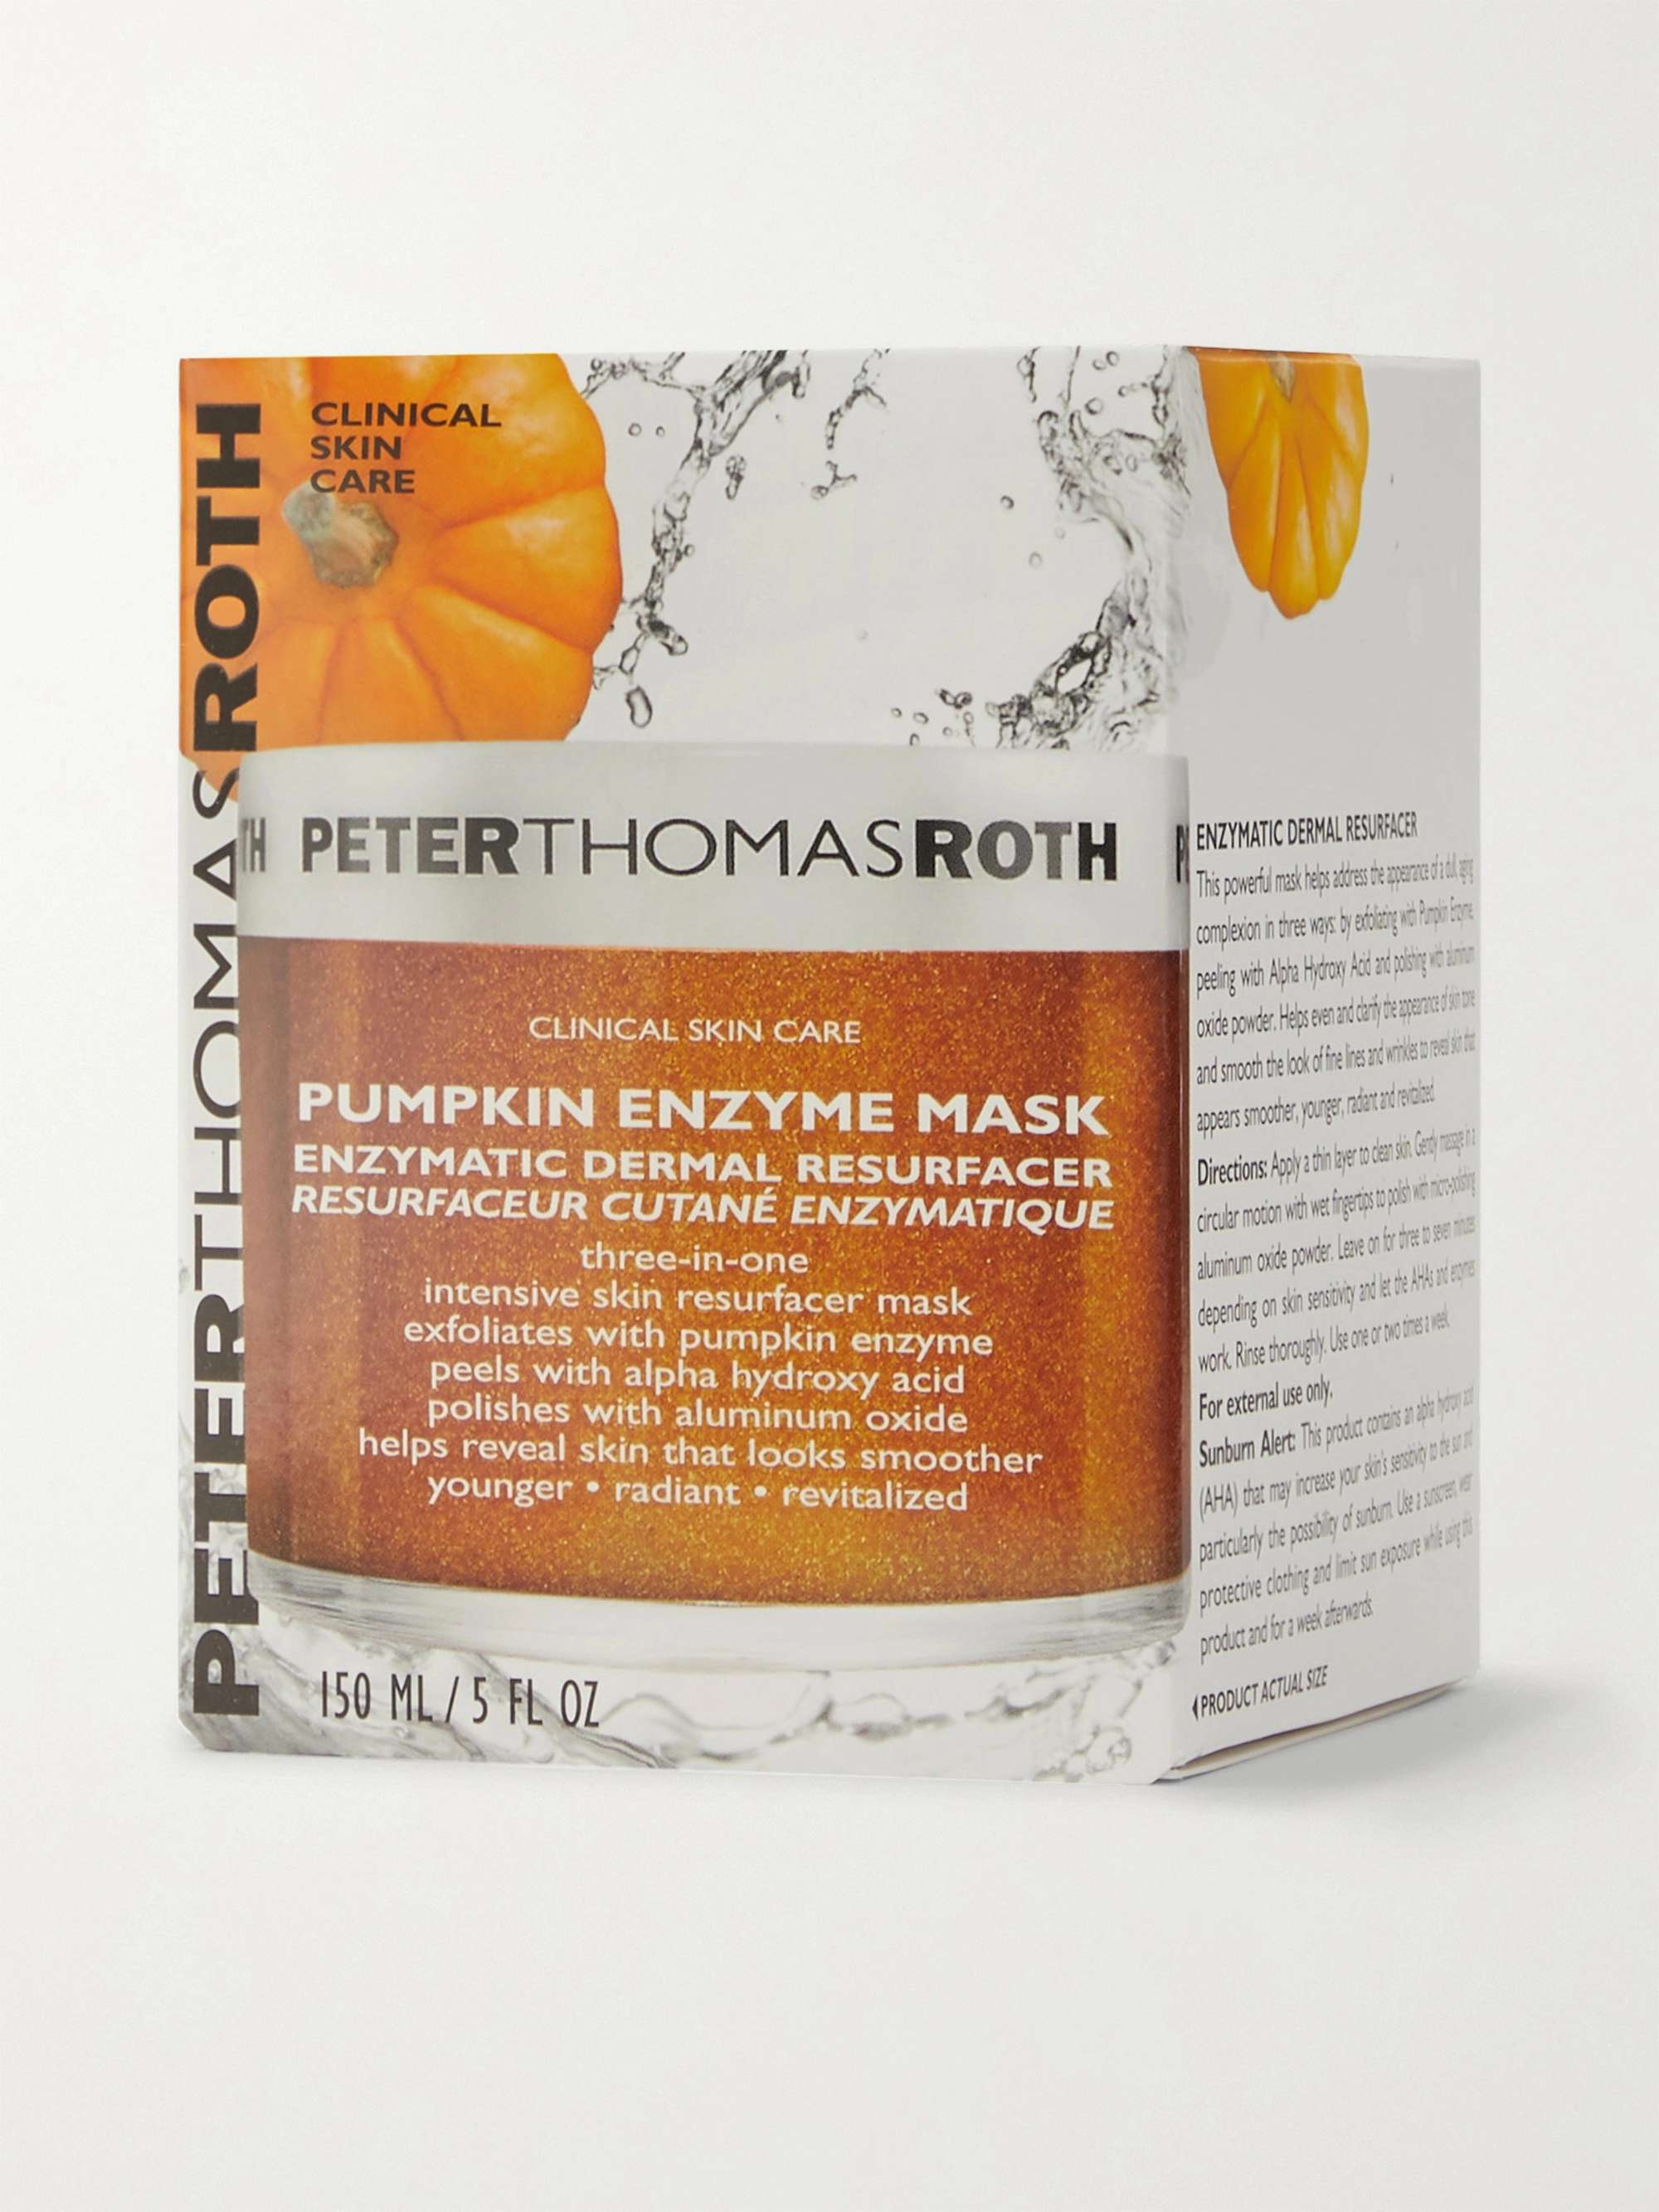 PETER THOMAS ROTH Pumpkin Enzyme Mask Enzymatic Dermal Resurfacer, 150ml